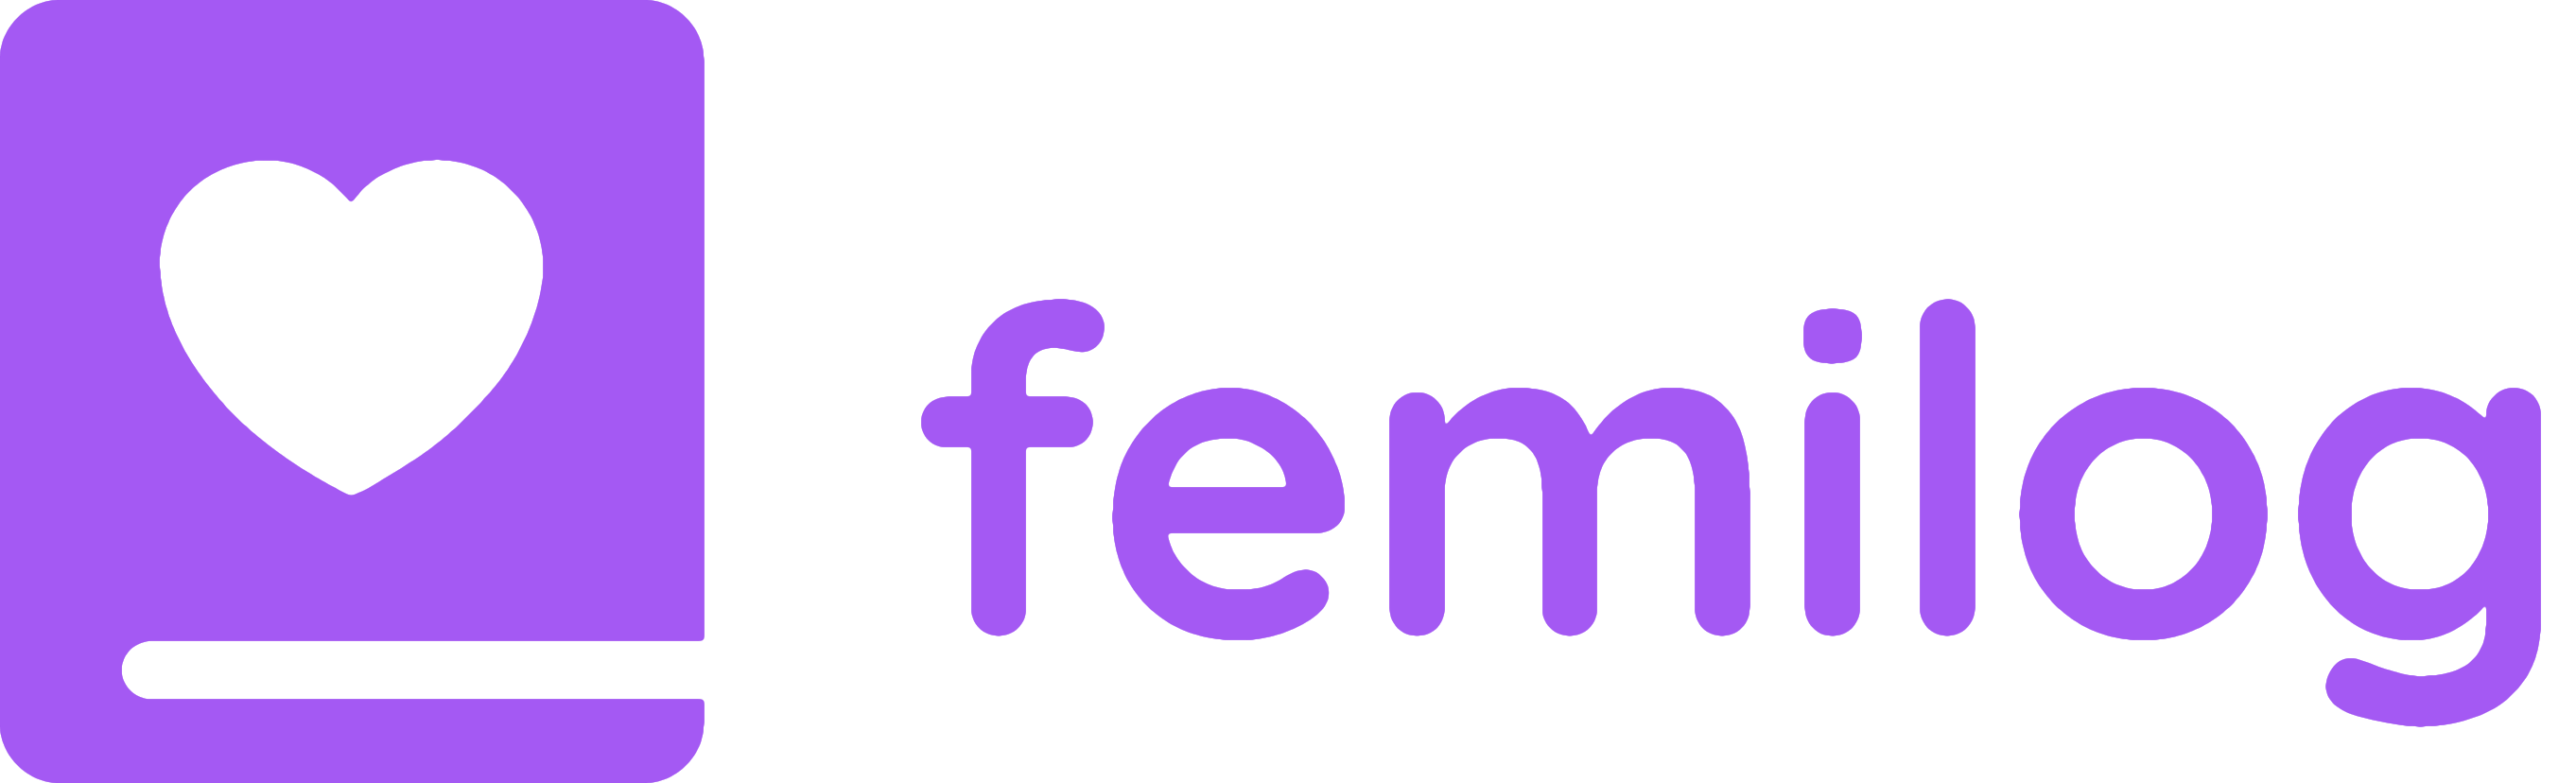 femilog_logo_purple